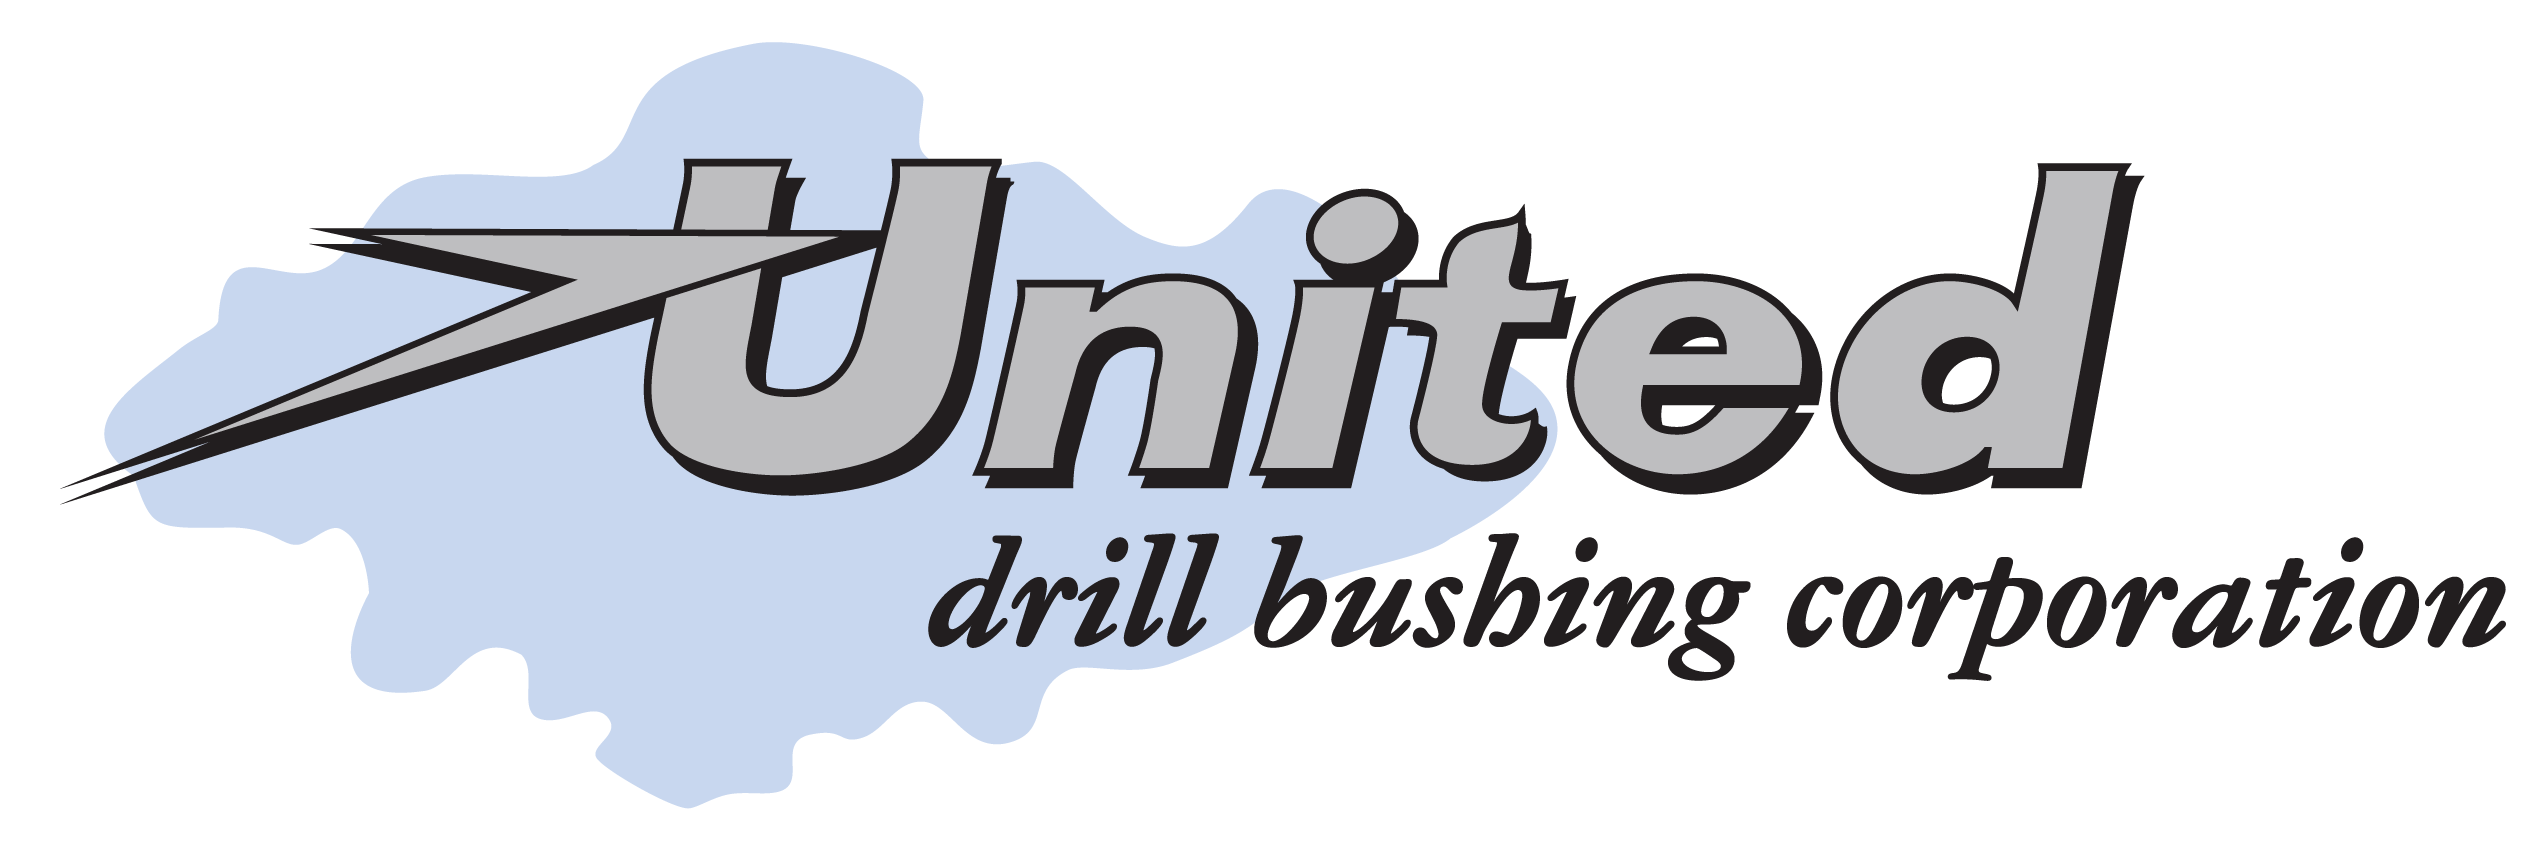 https://www.ucc-udb.com/images/col-logo.gif